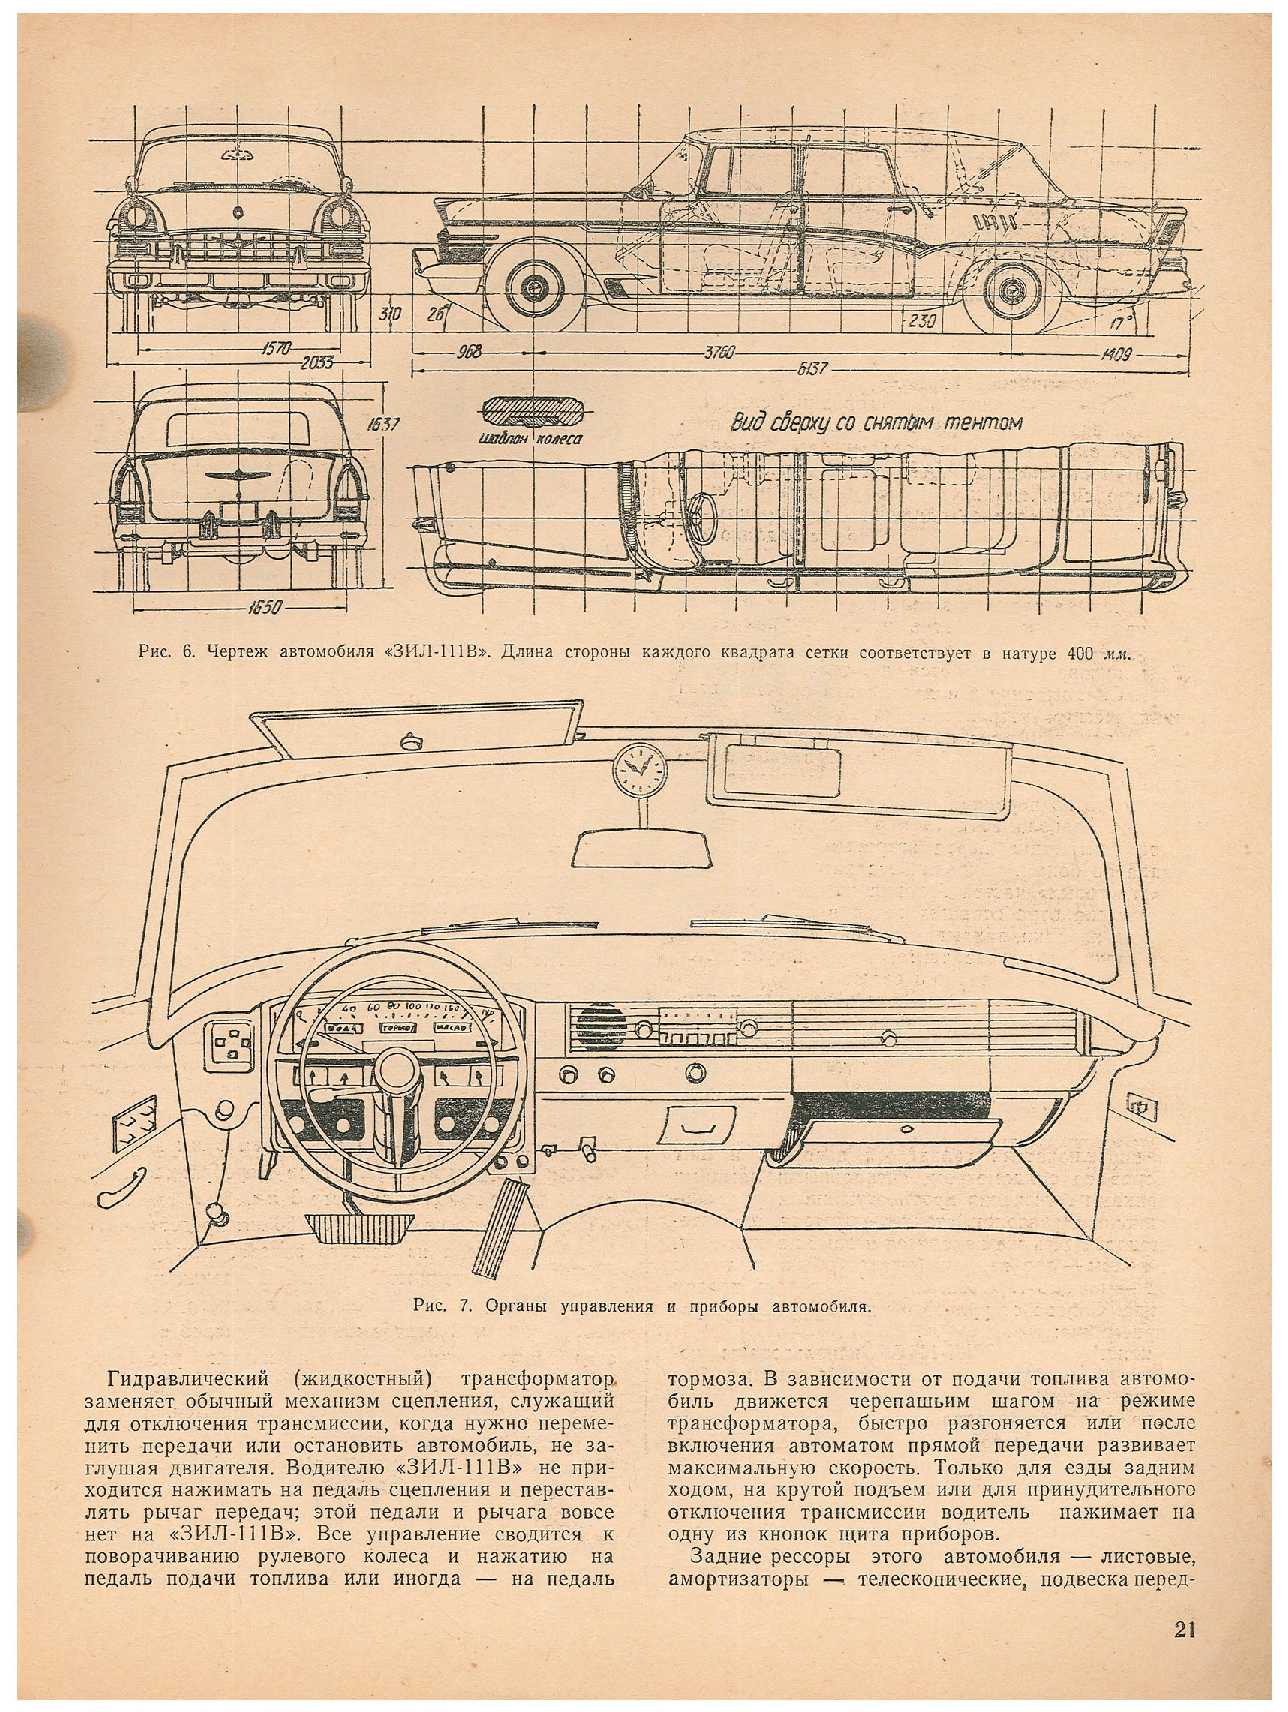 ЮМК 1, 1962, 21 c.